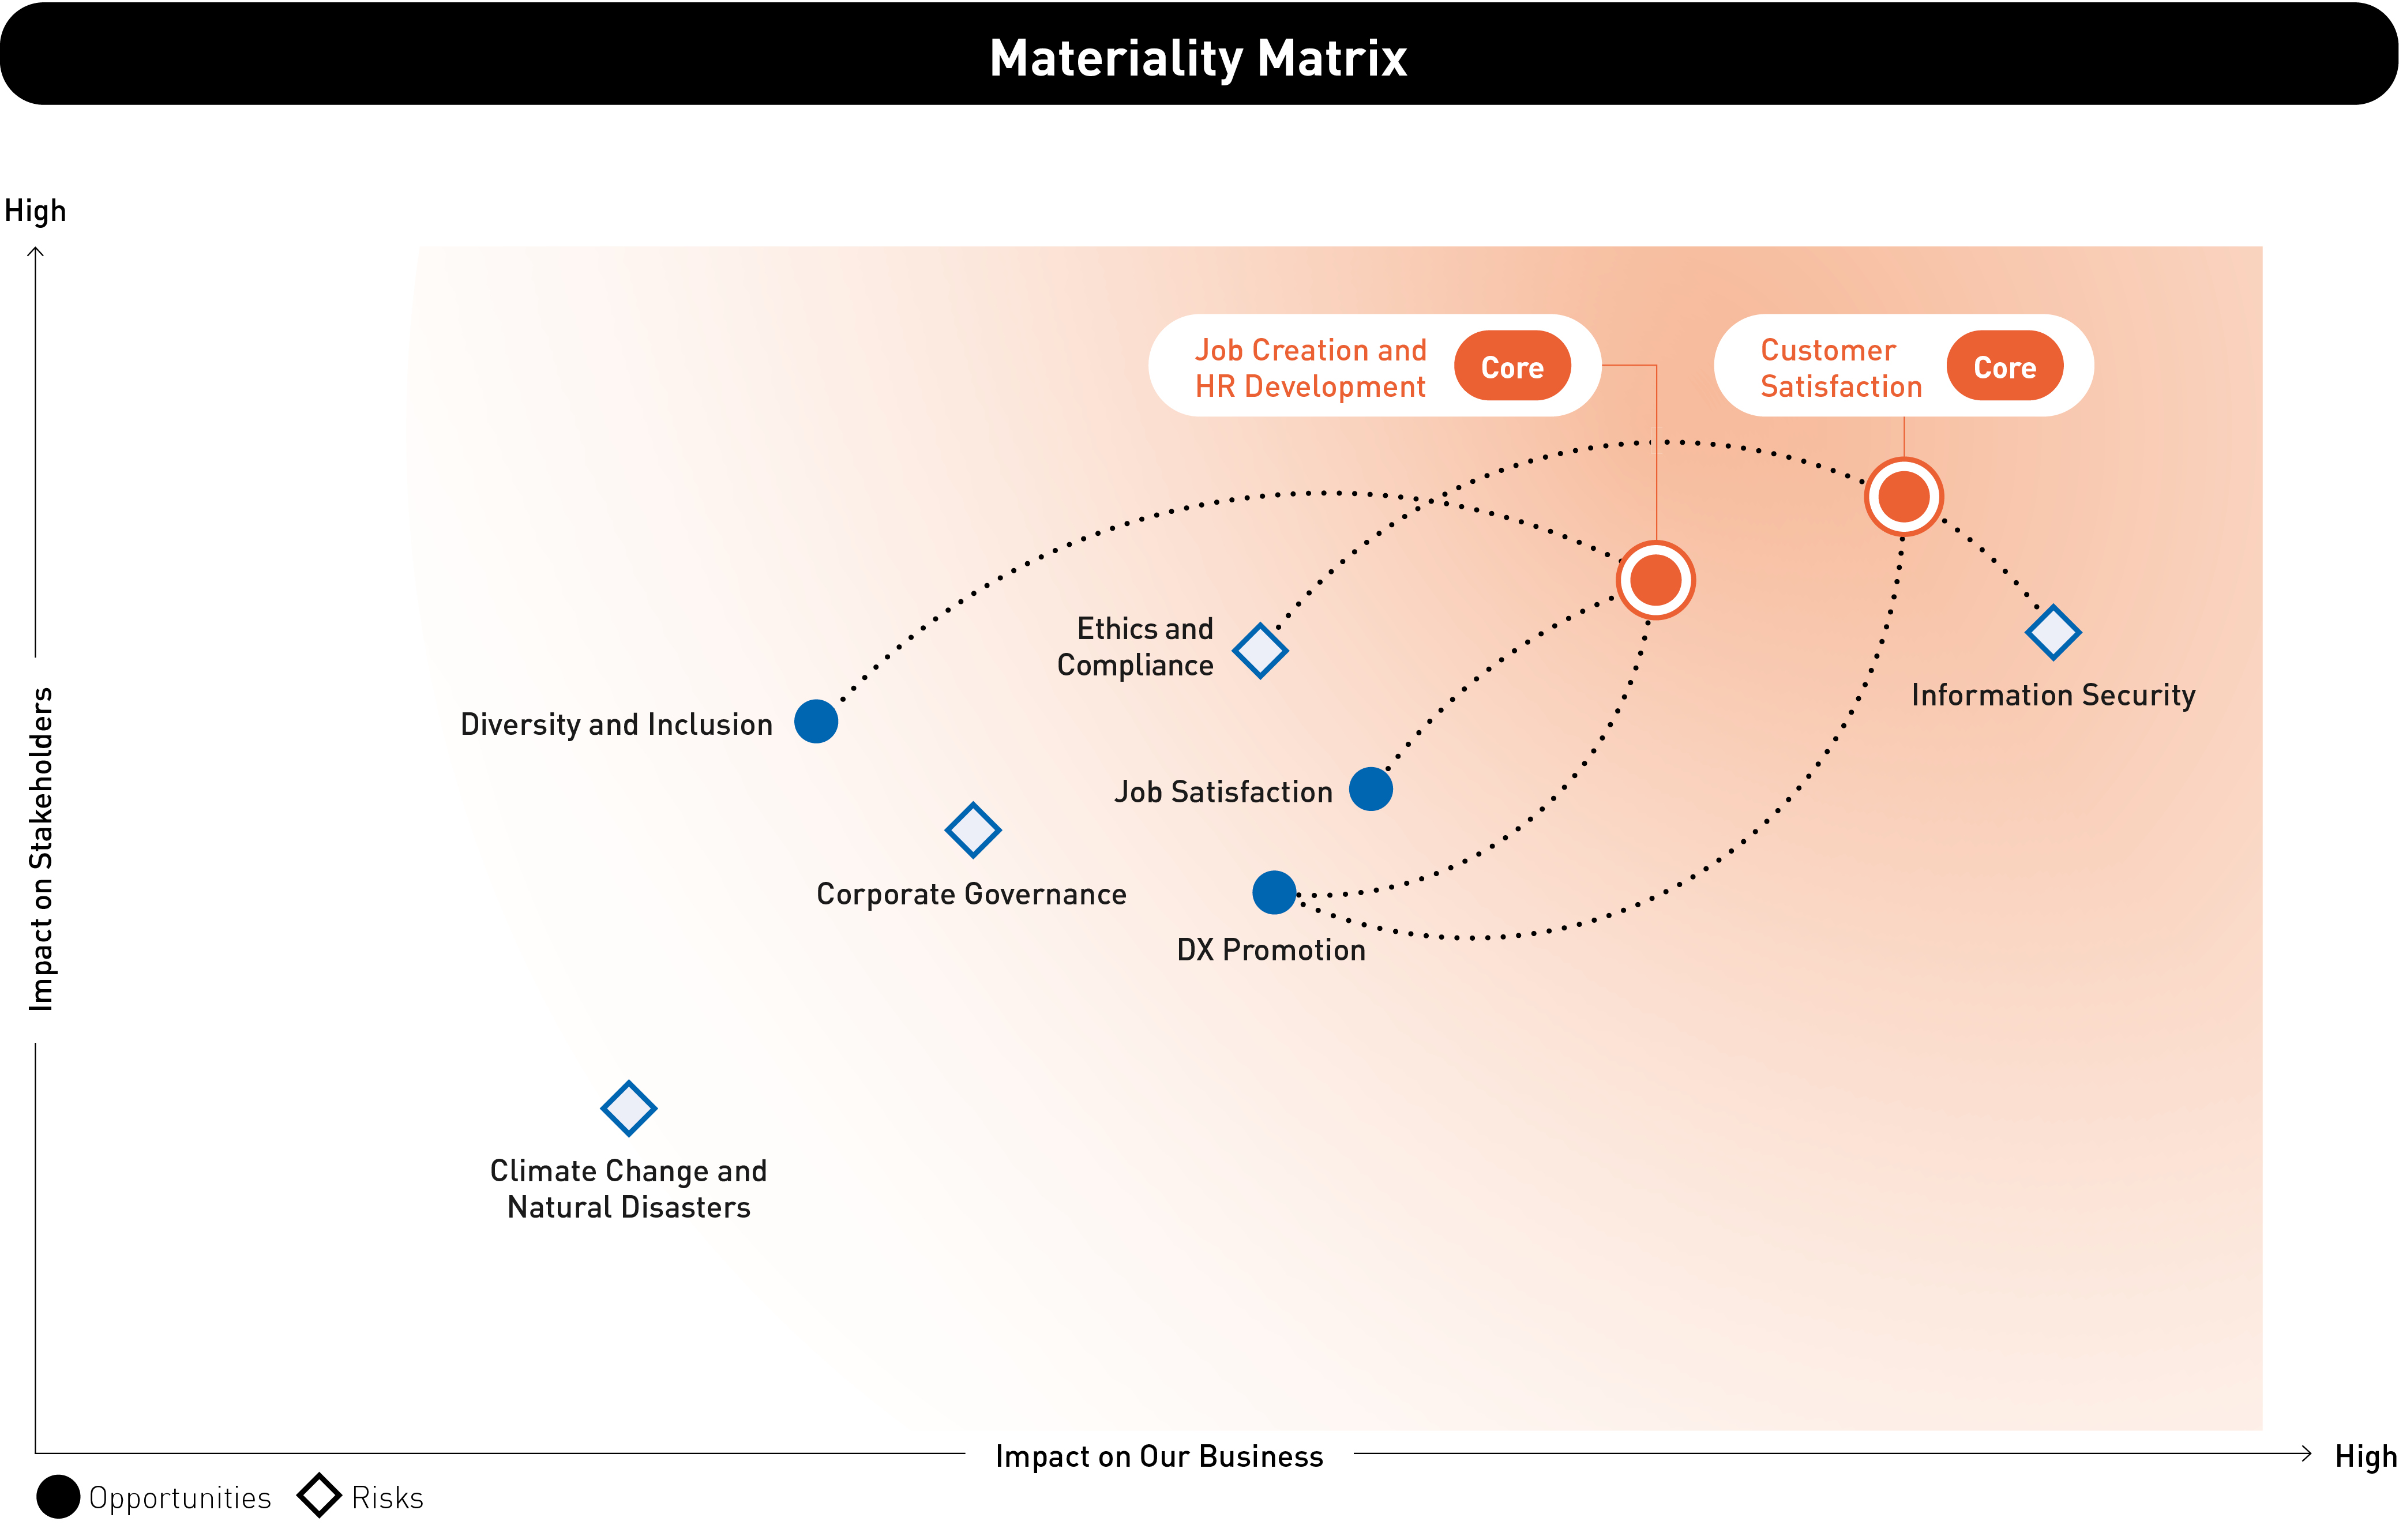 Materiality Matrix